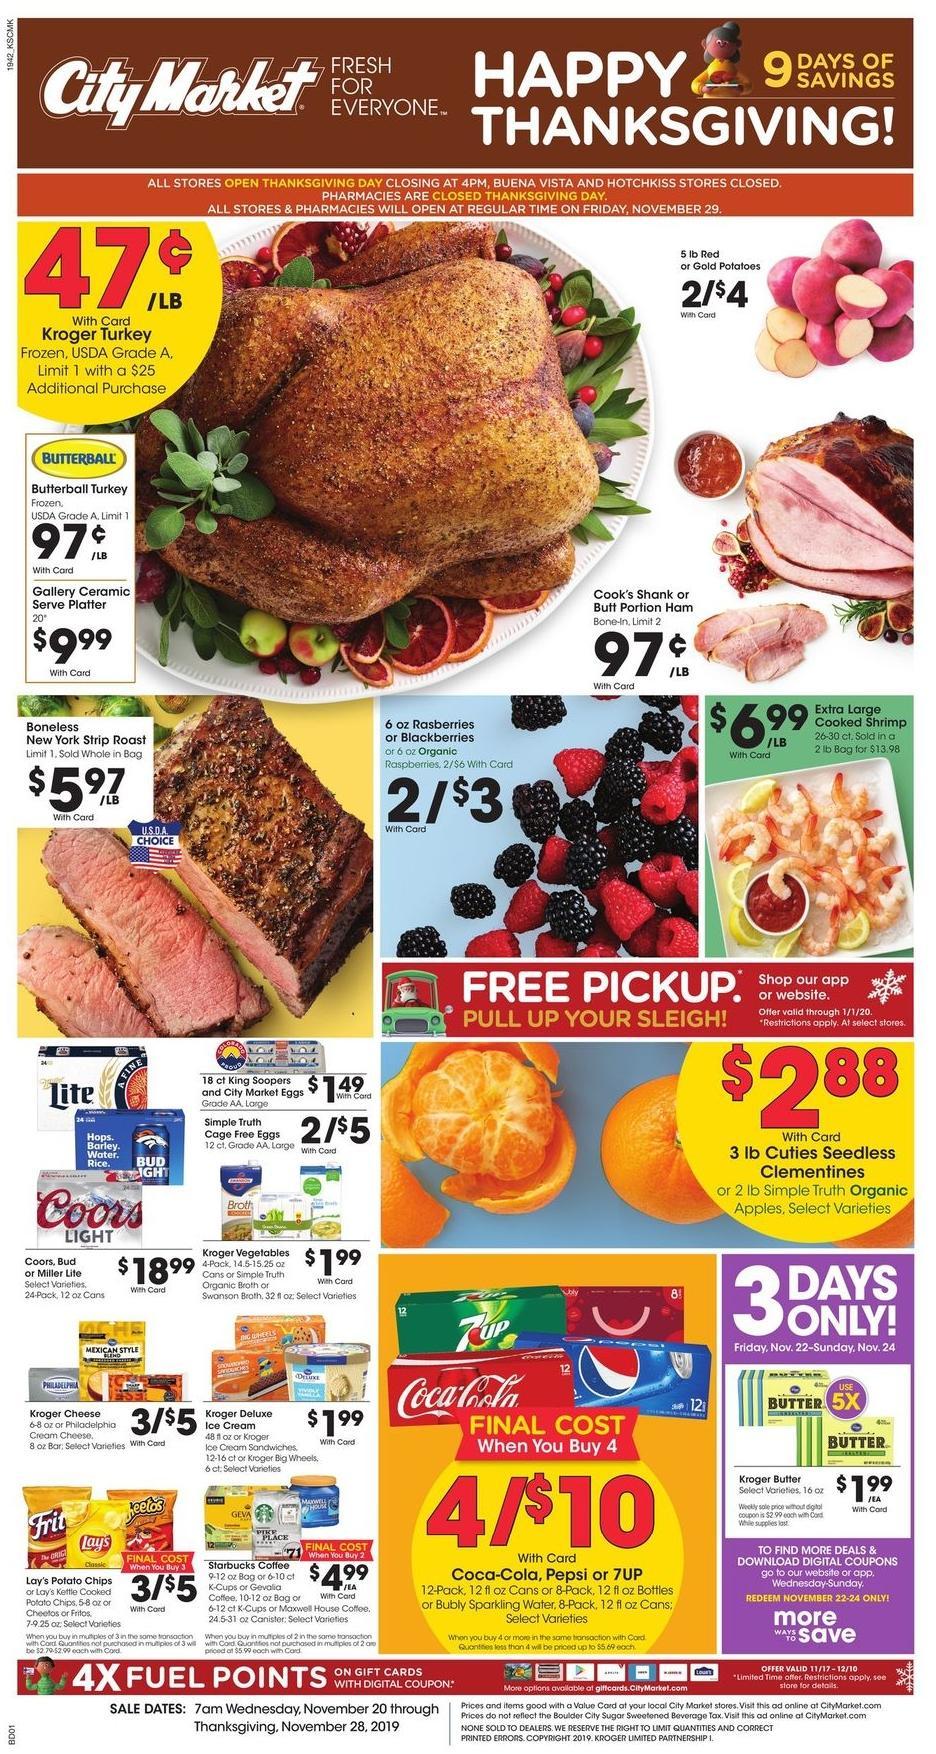 City Market Weekly Ad from November 20